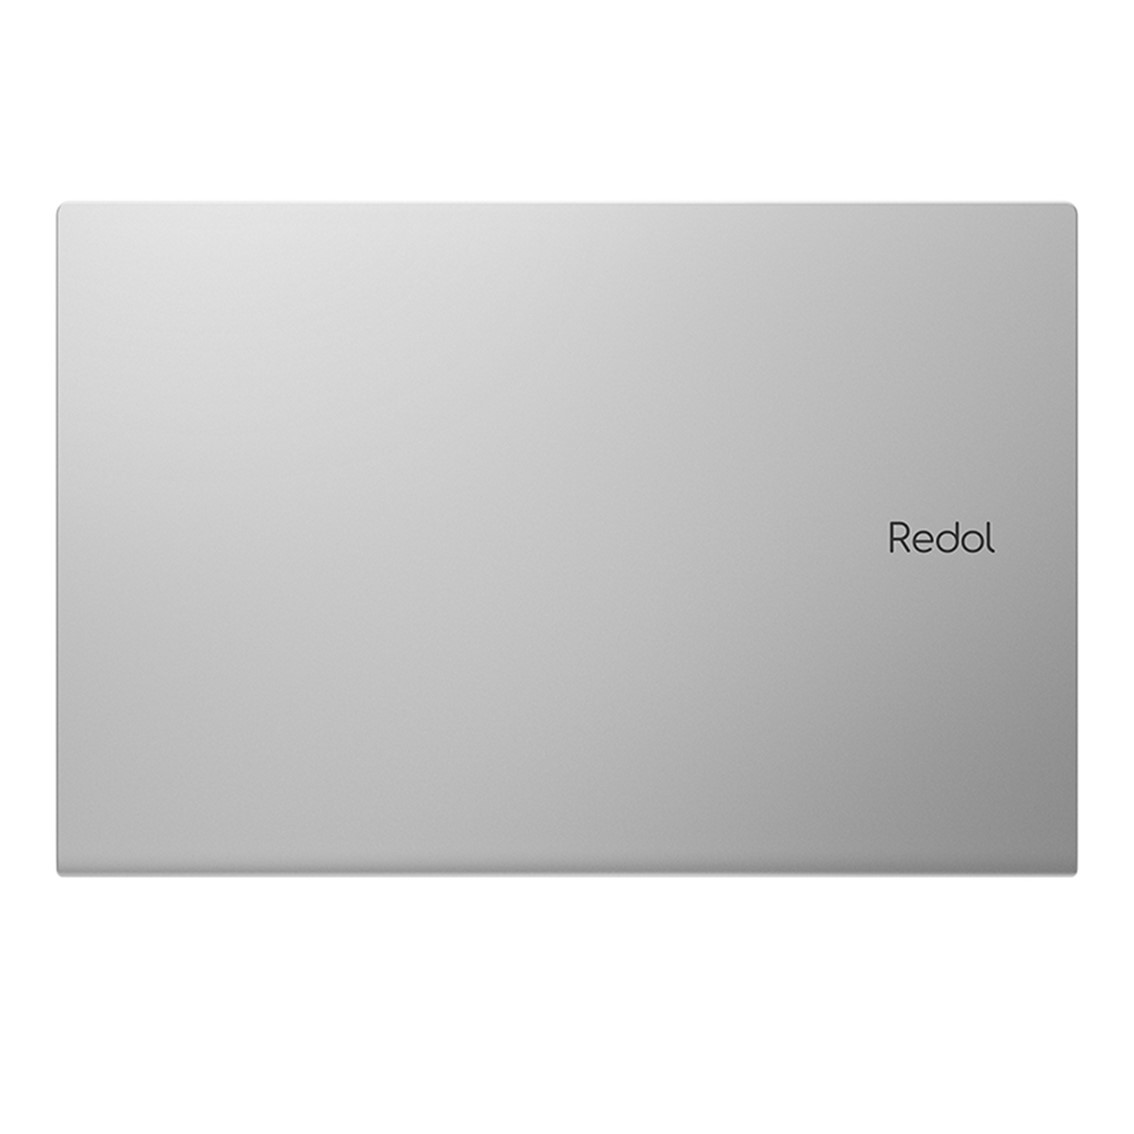 Redolbook14 高闪银 11代i3 14英寸 窄边框轻薄笔记本电脑（Windows 10 Home/i3-1115G4/8GB/512G SSD/集显）